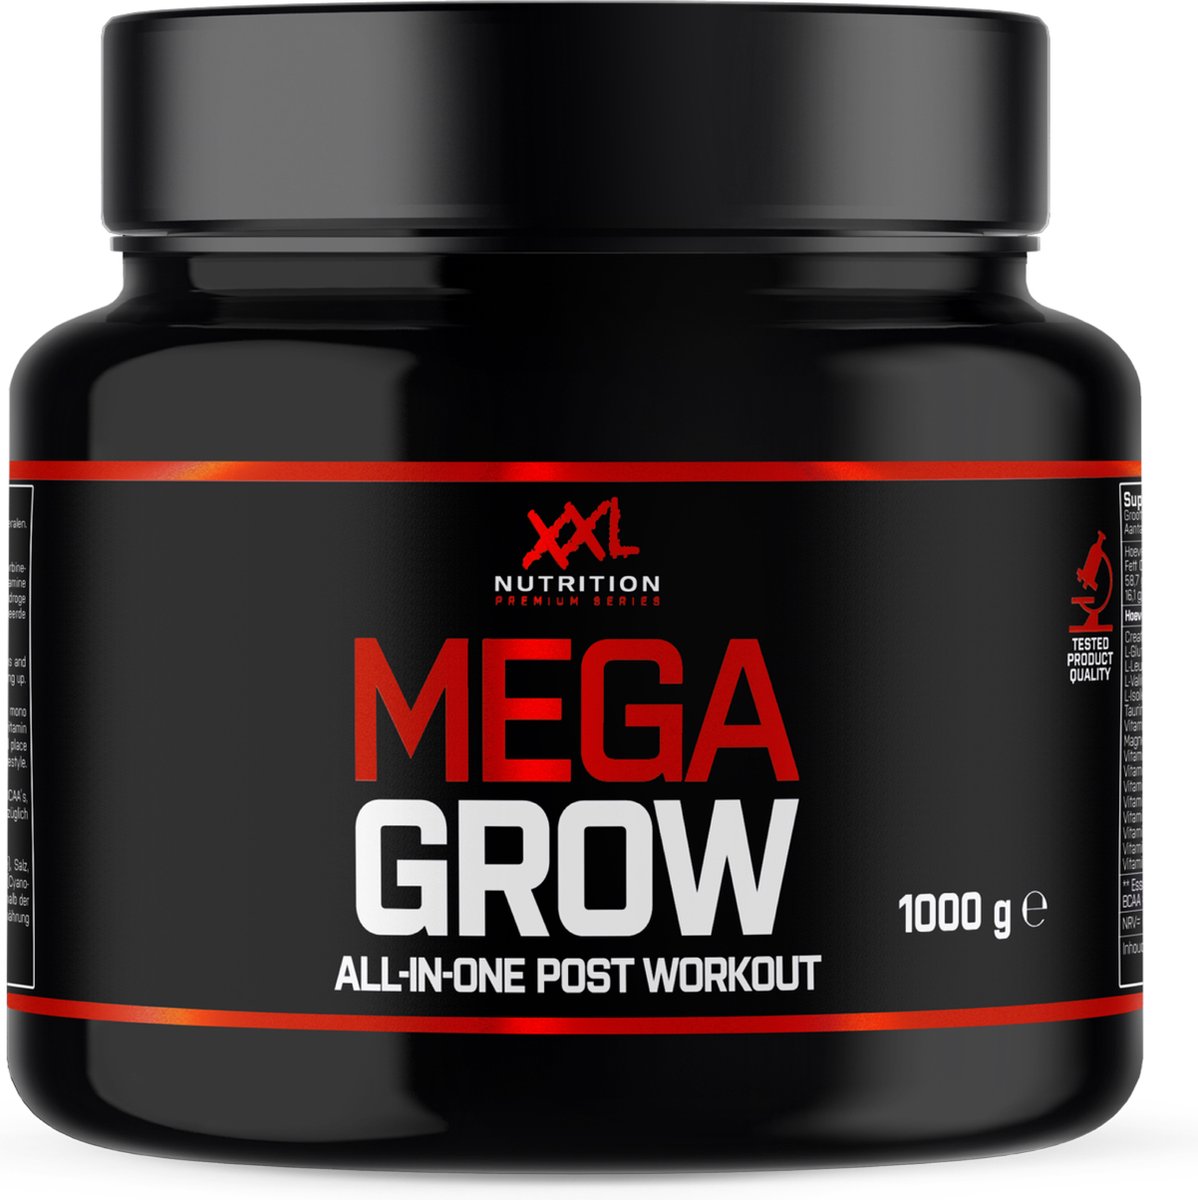 XXL Nutrition - Muscle Grow - Creatine/Post Workout Supplement - Orange - 1000 gram